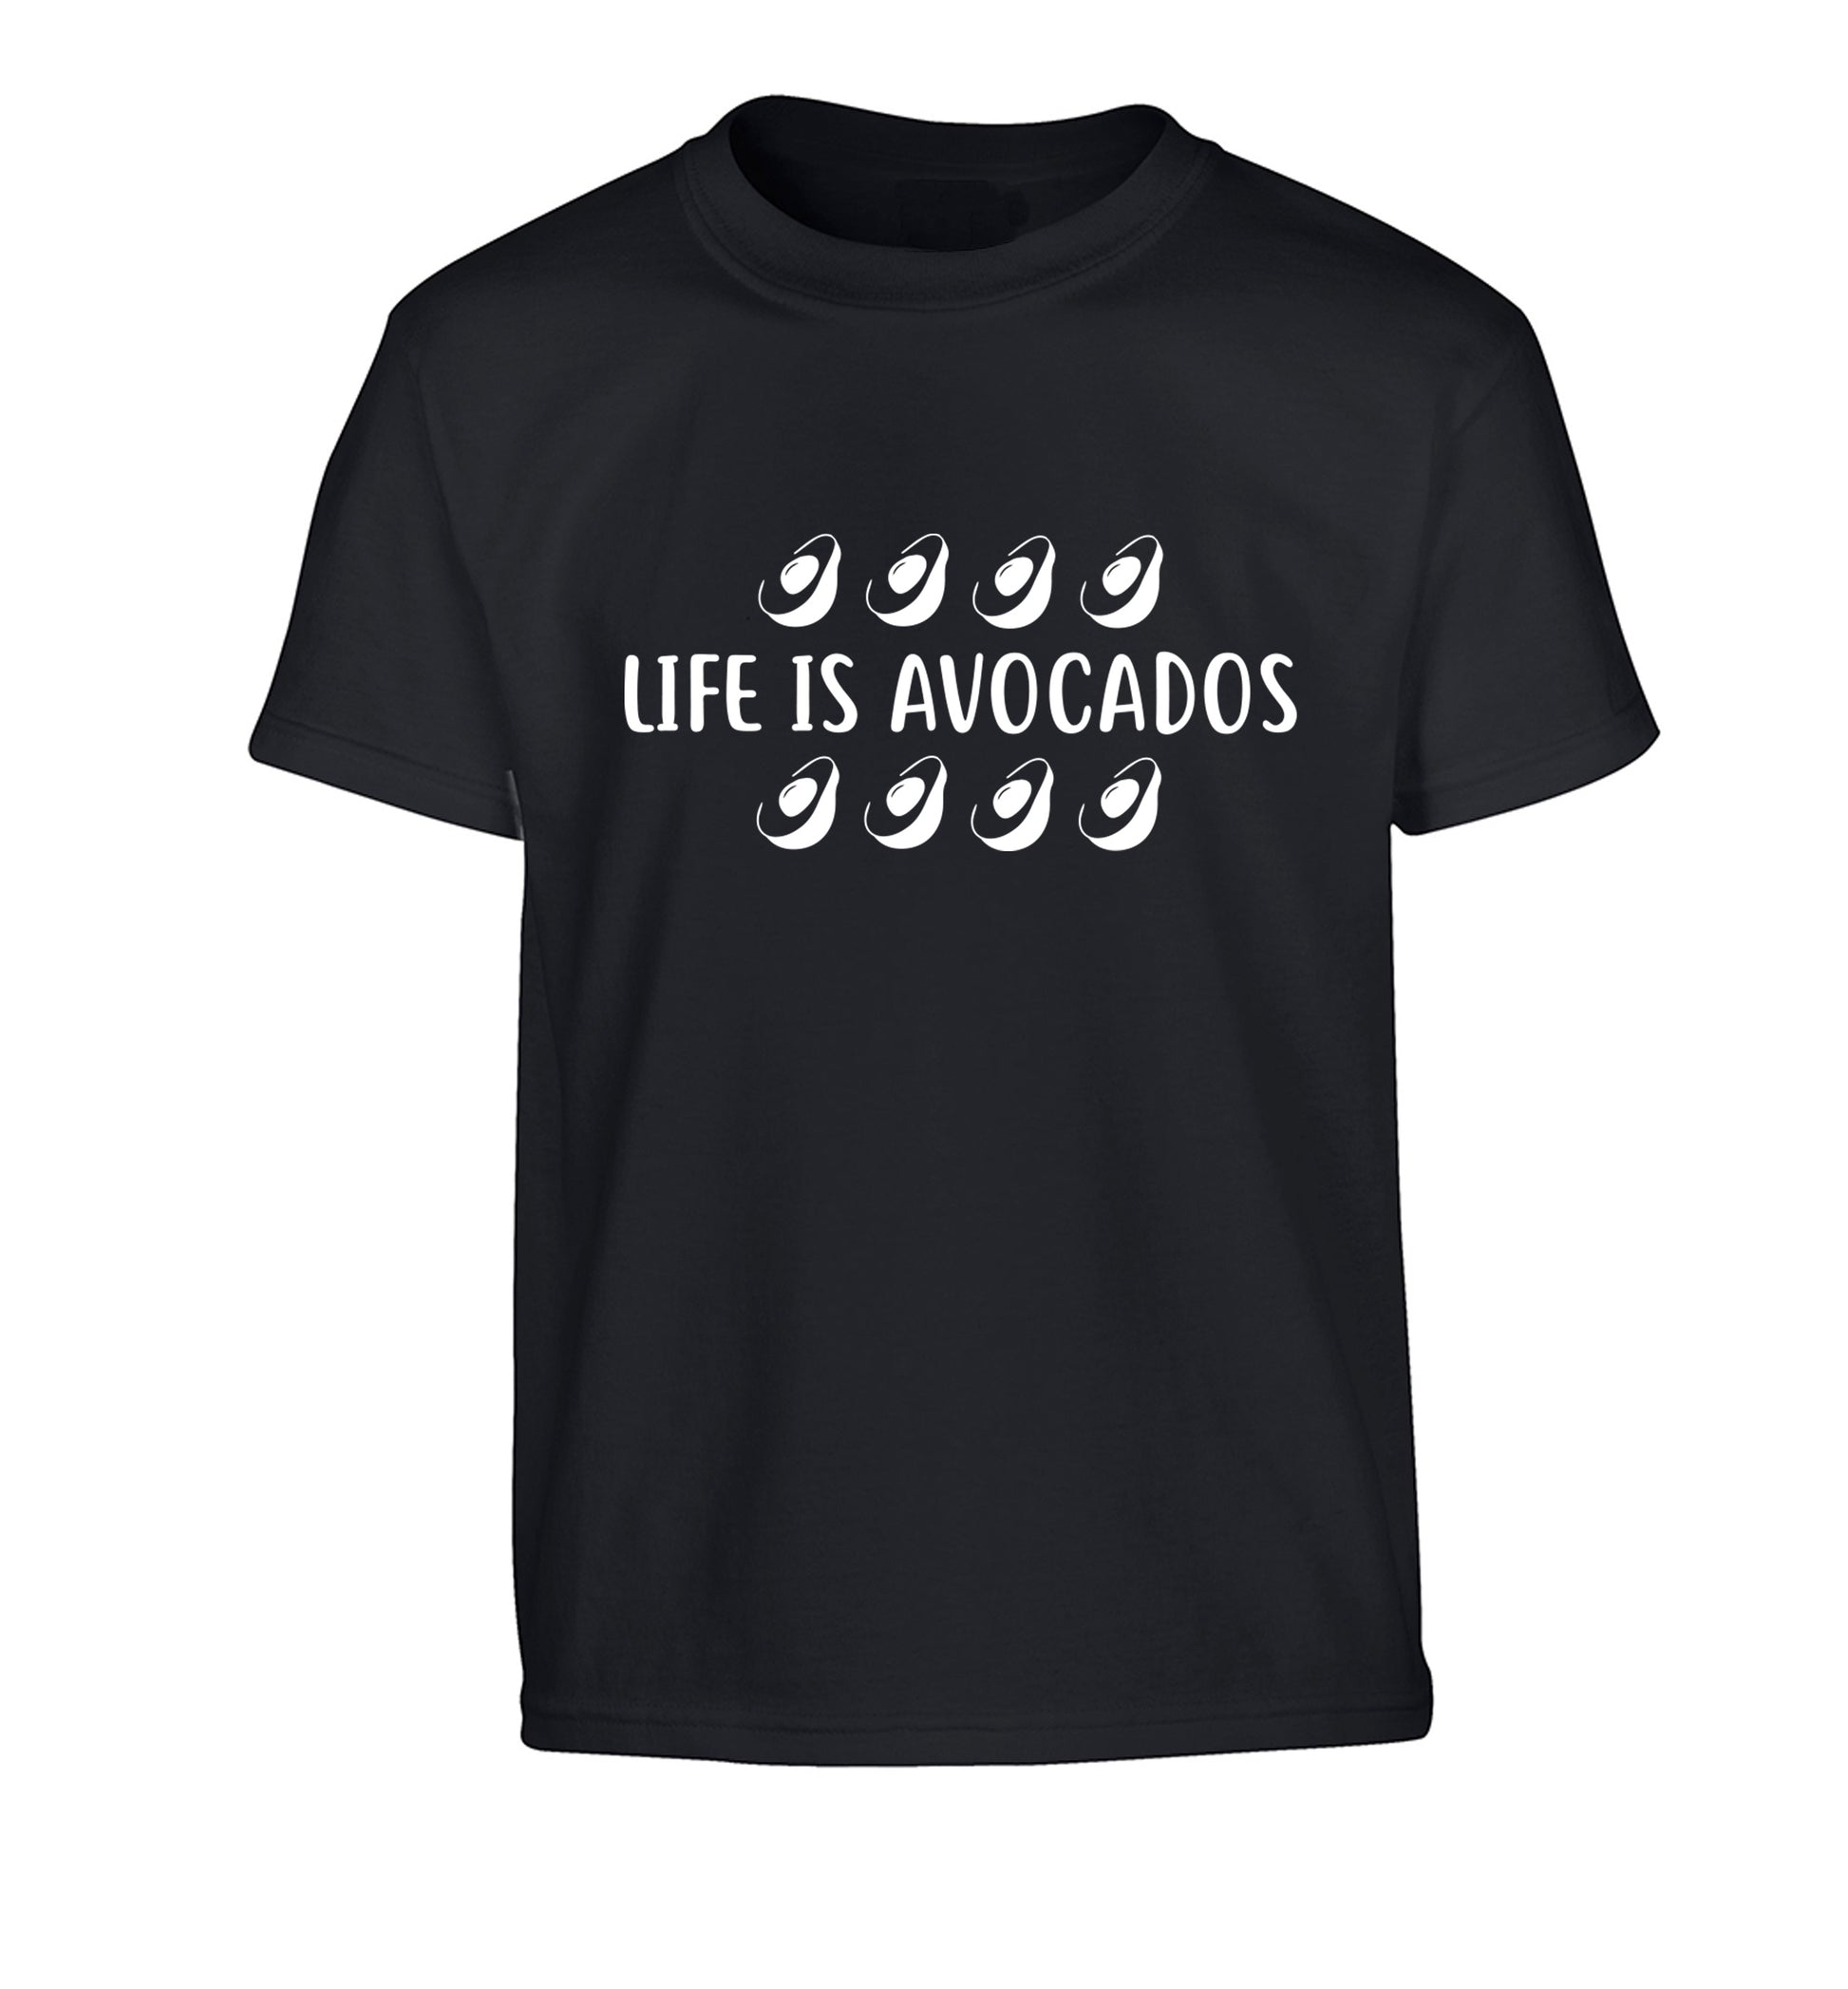 Life is avocados Children's black Tshirt 12-14 Years